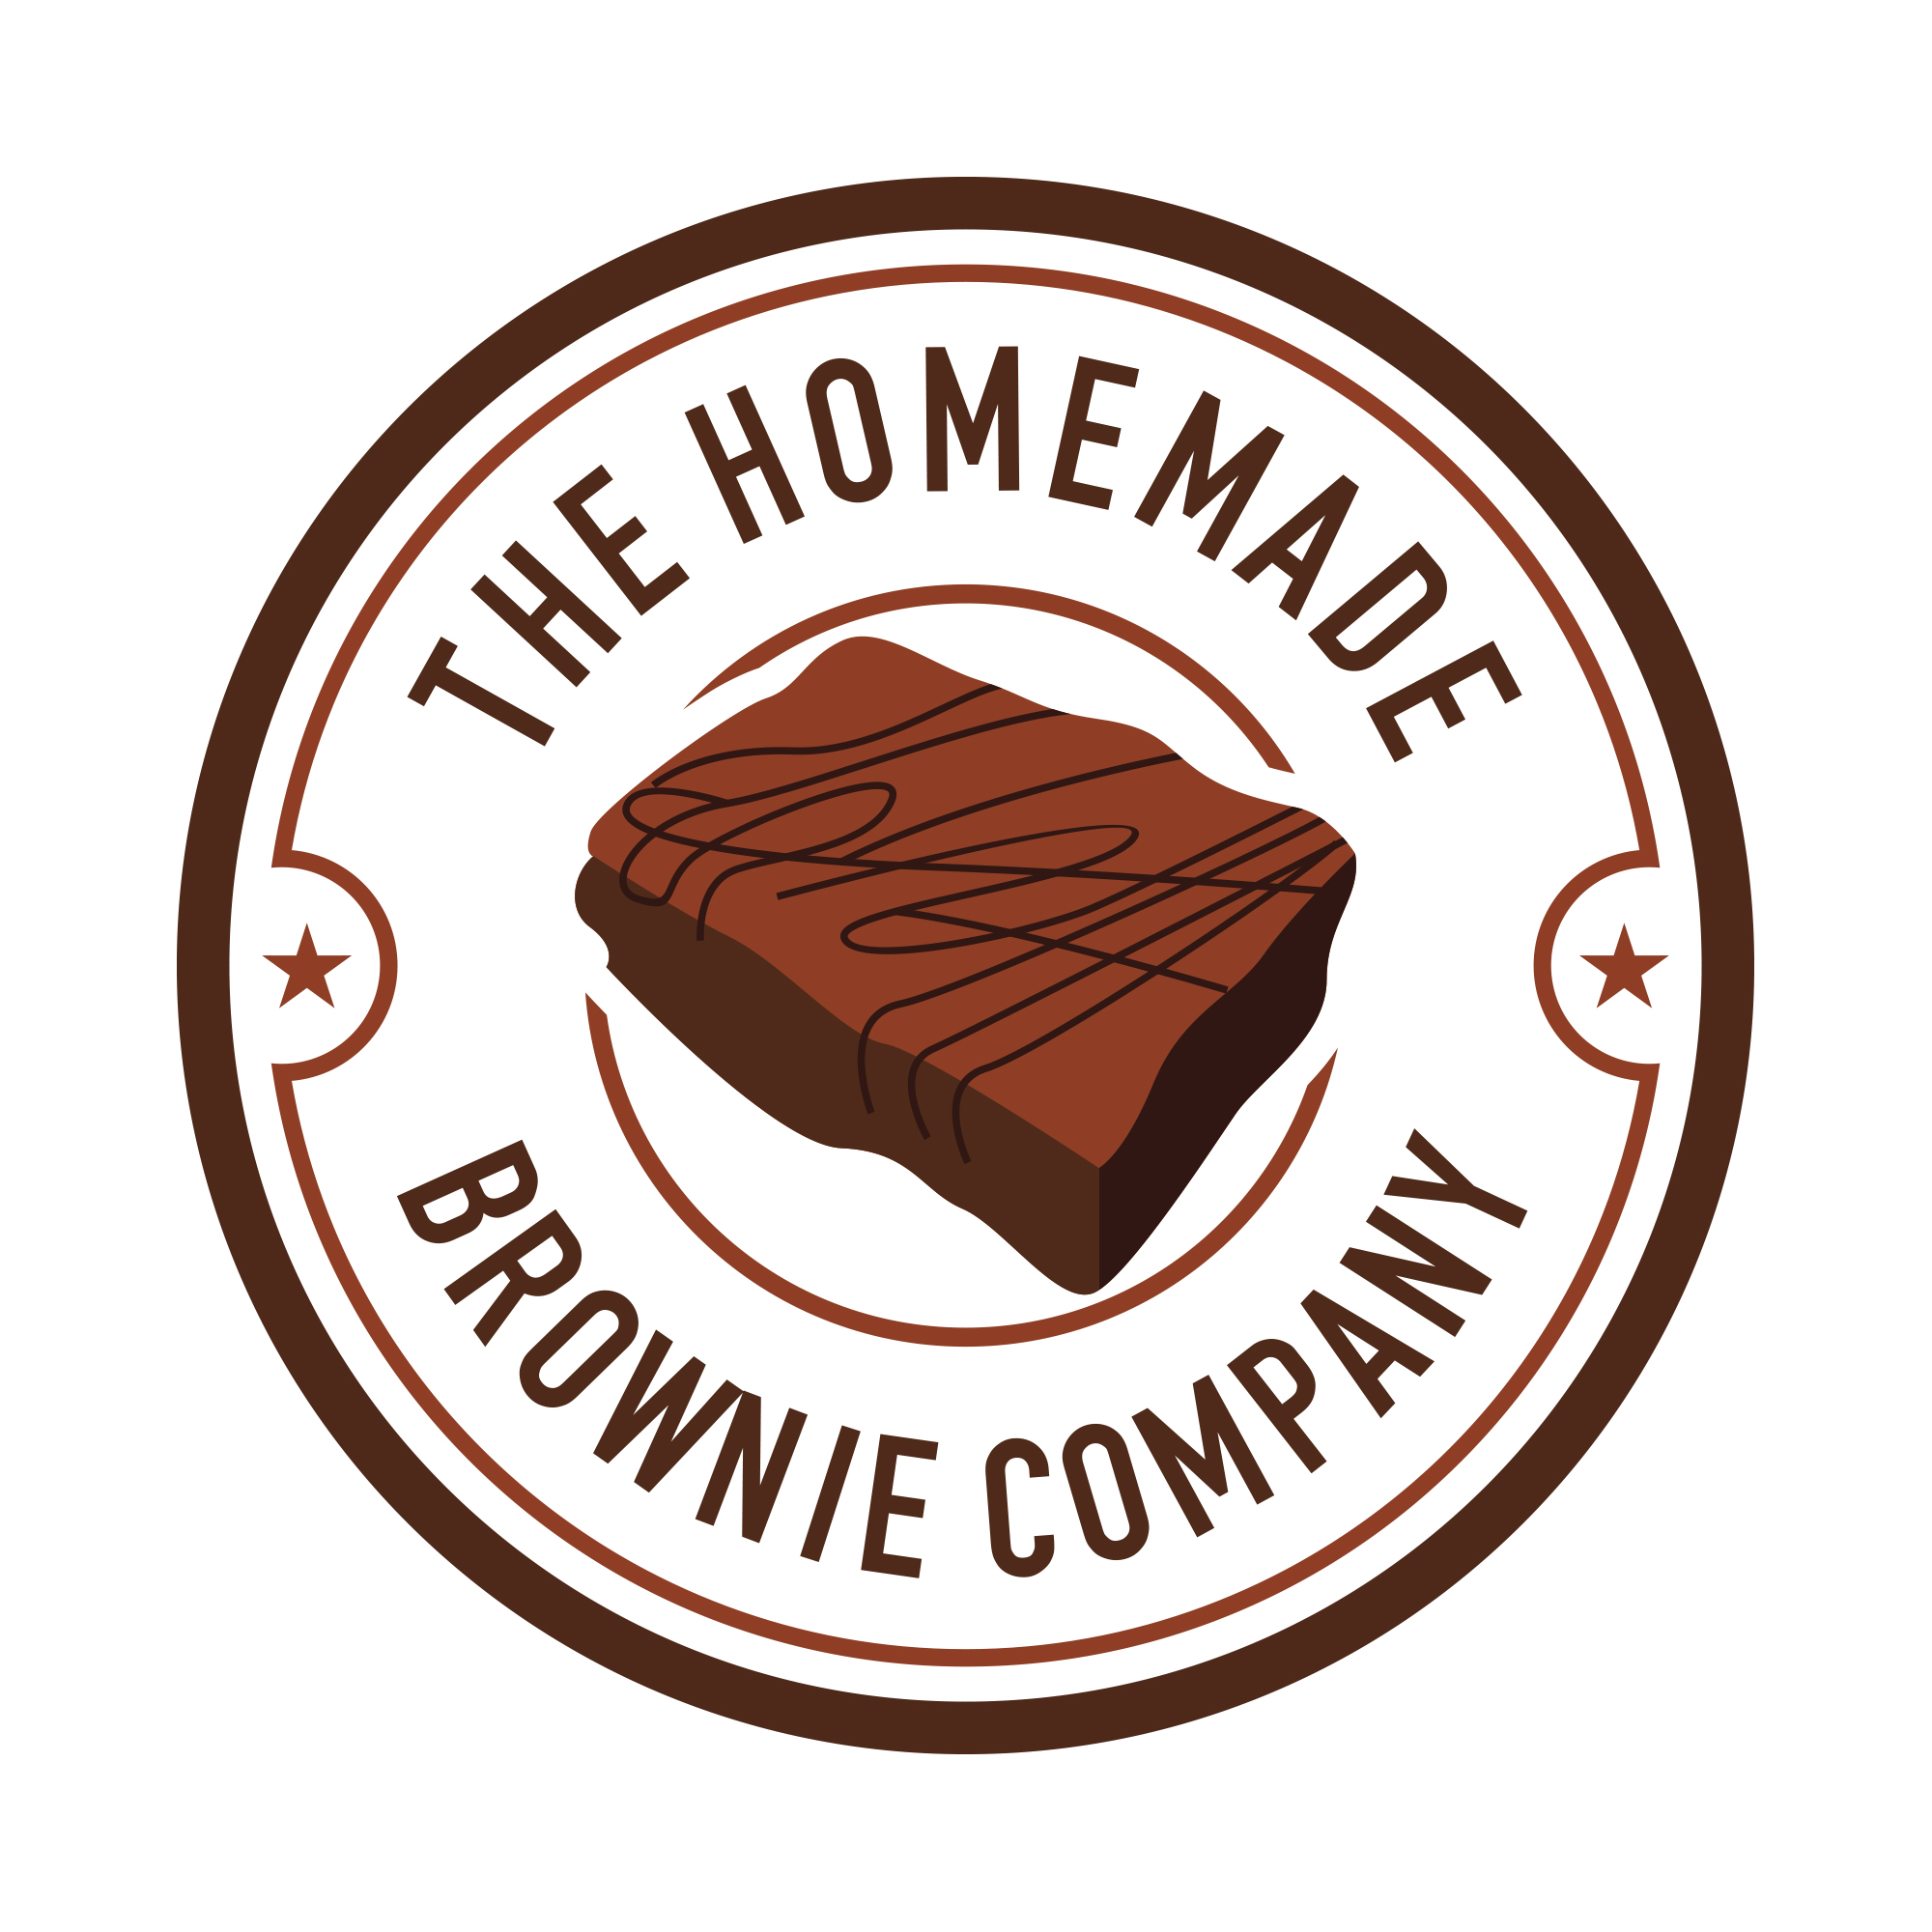 The Homemade Brownie Company logo